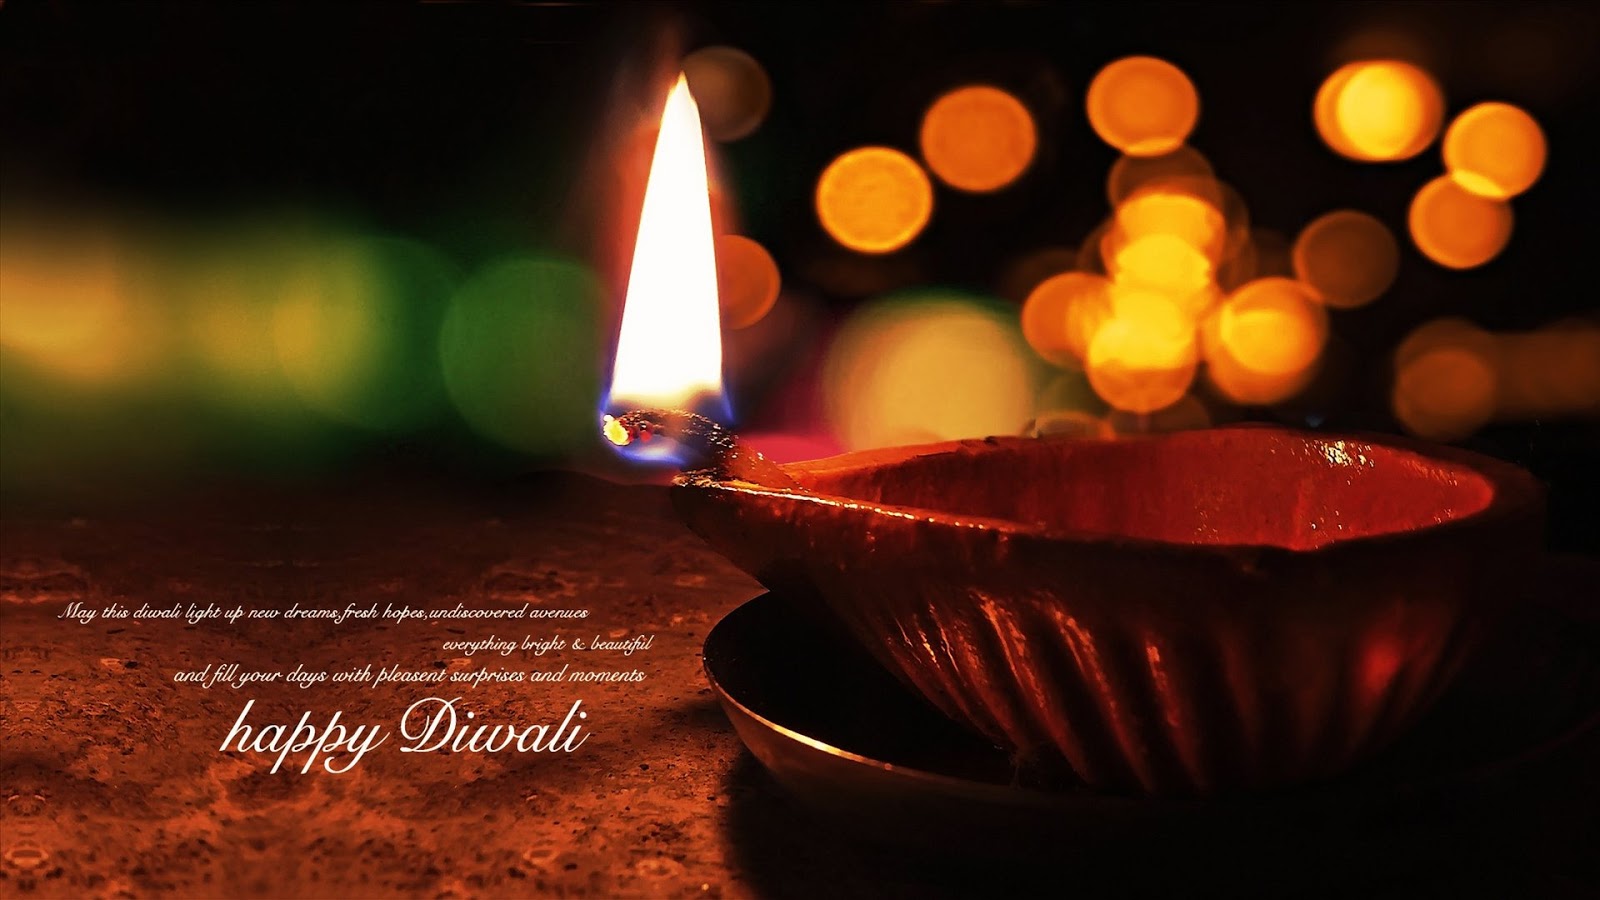 Happy Diwali - Happy Diwali Images Hd , HD Wallpaper & Backgrounds